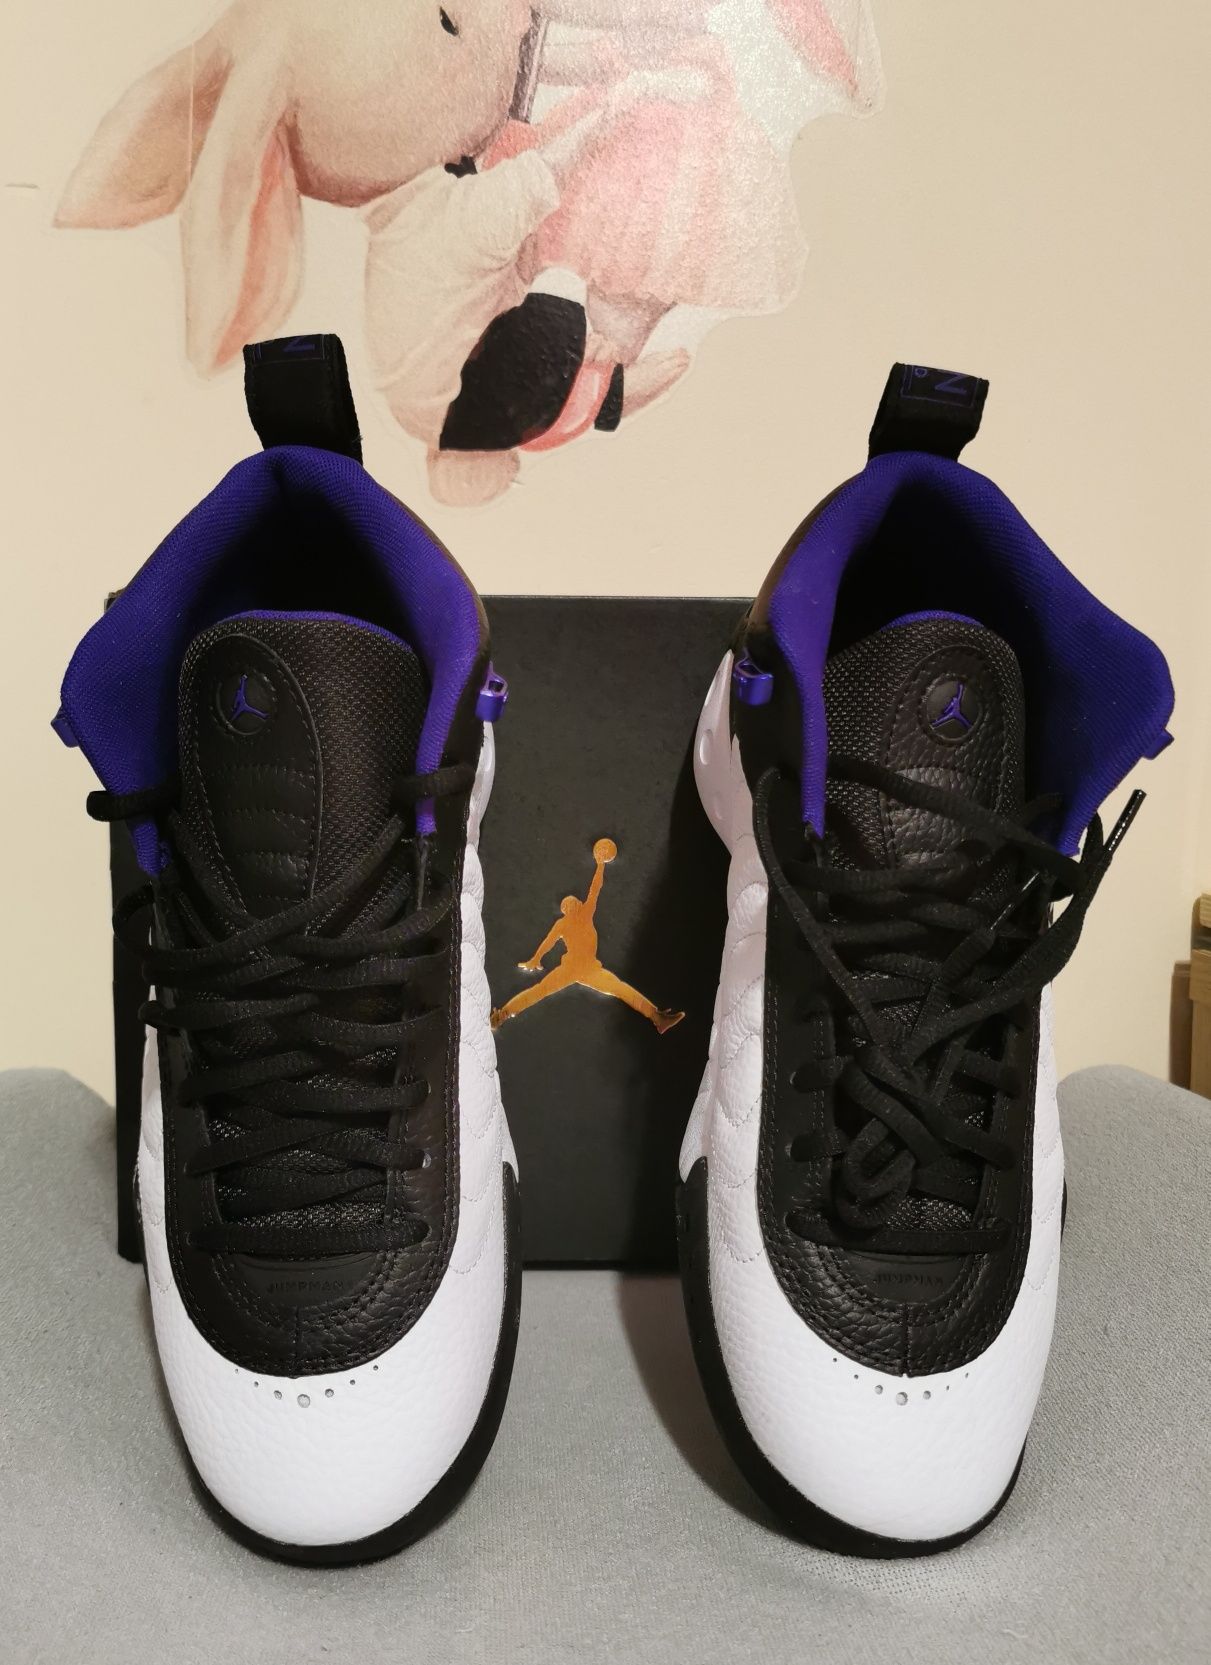 Jordan Jumpman Pro buty sneakersy wysokie do koszykówki 44 28cm  nowe